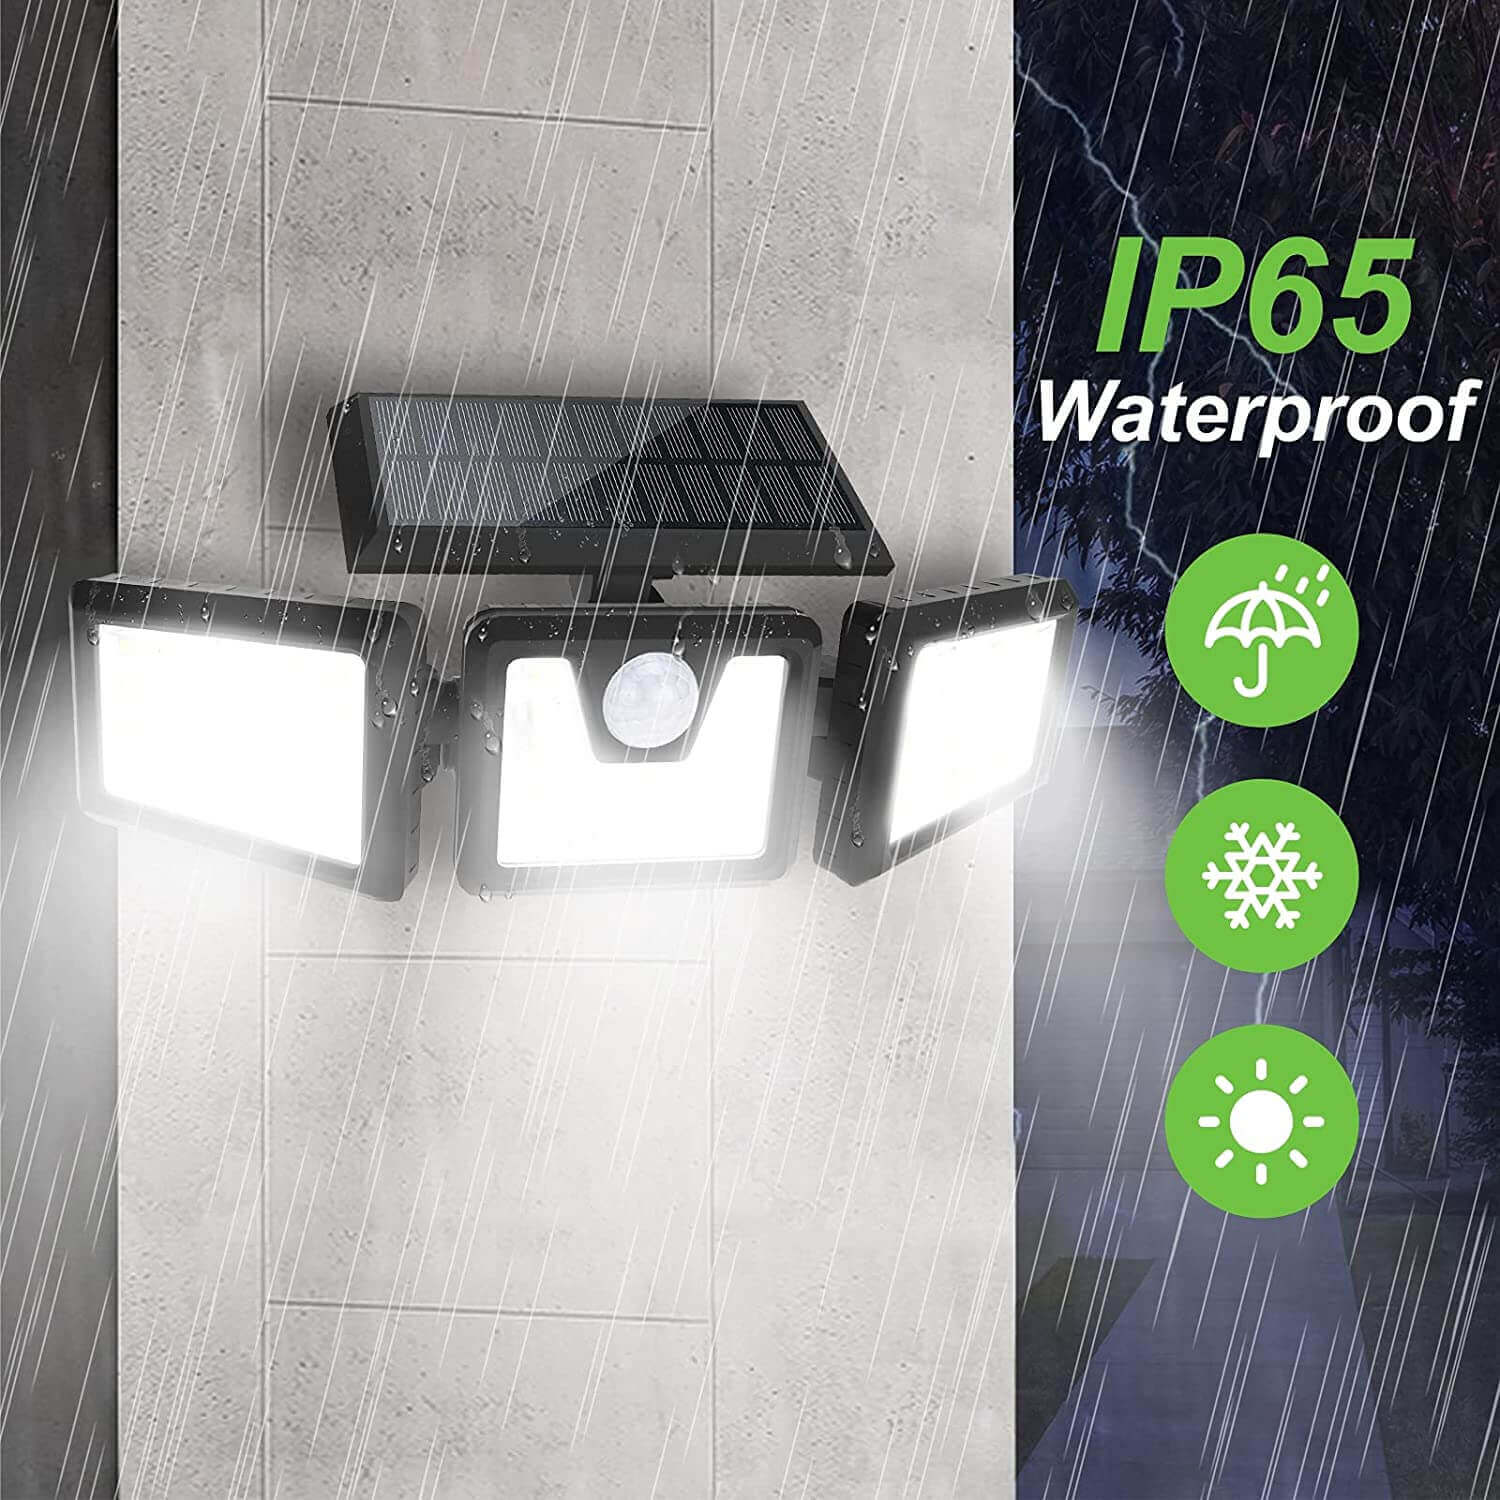 wowow 3 adjustable head outdoor solar motion sensor flood lights